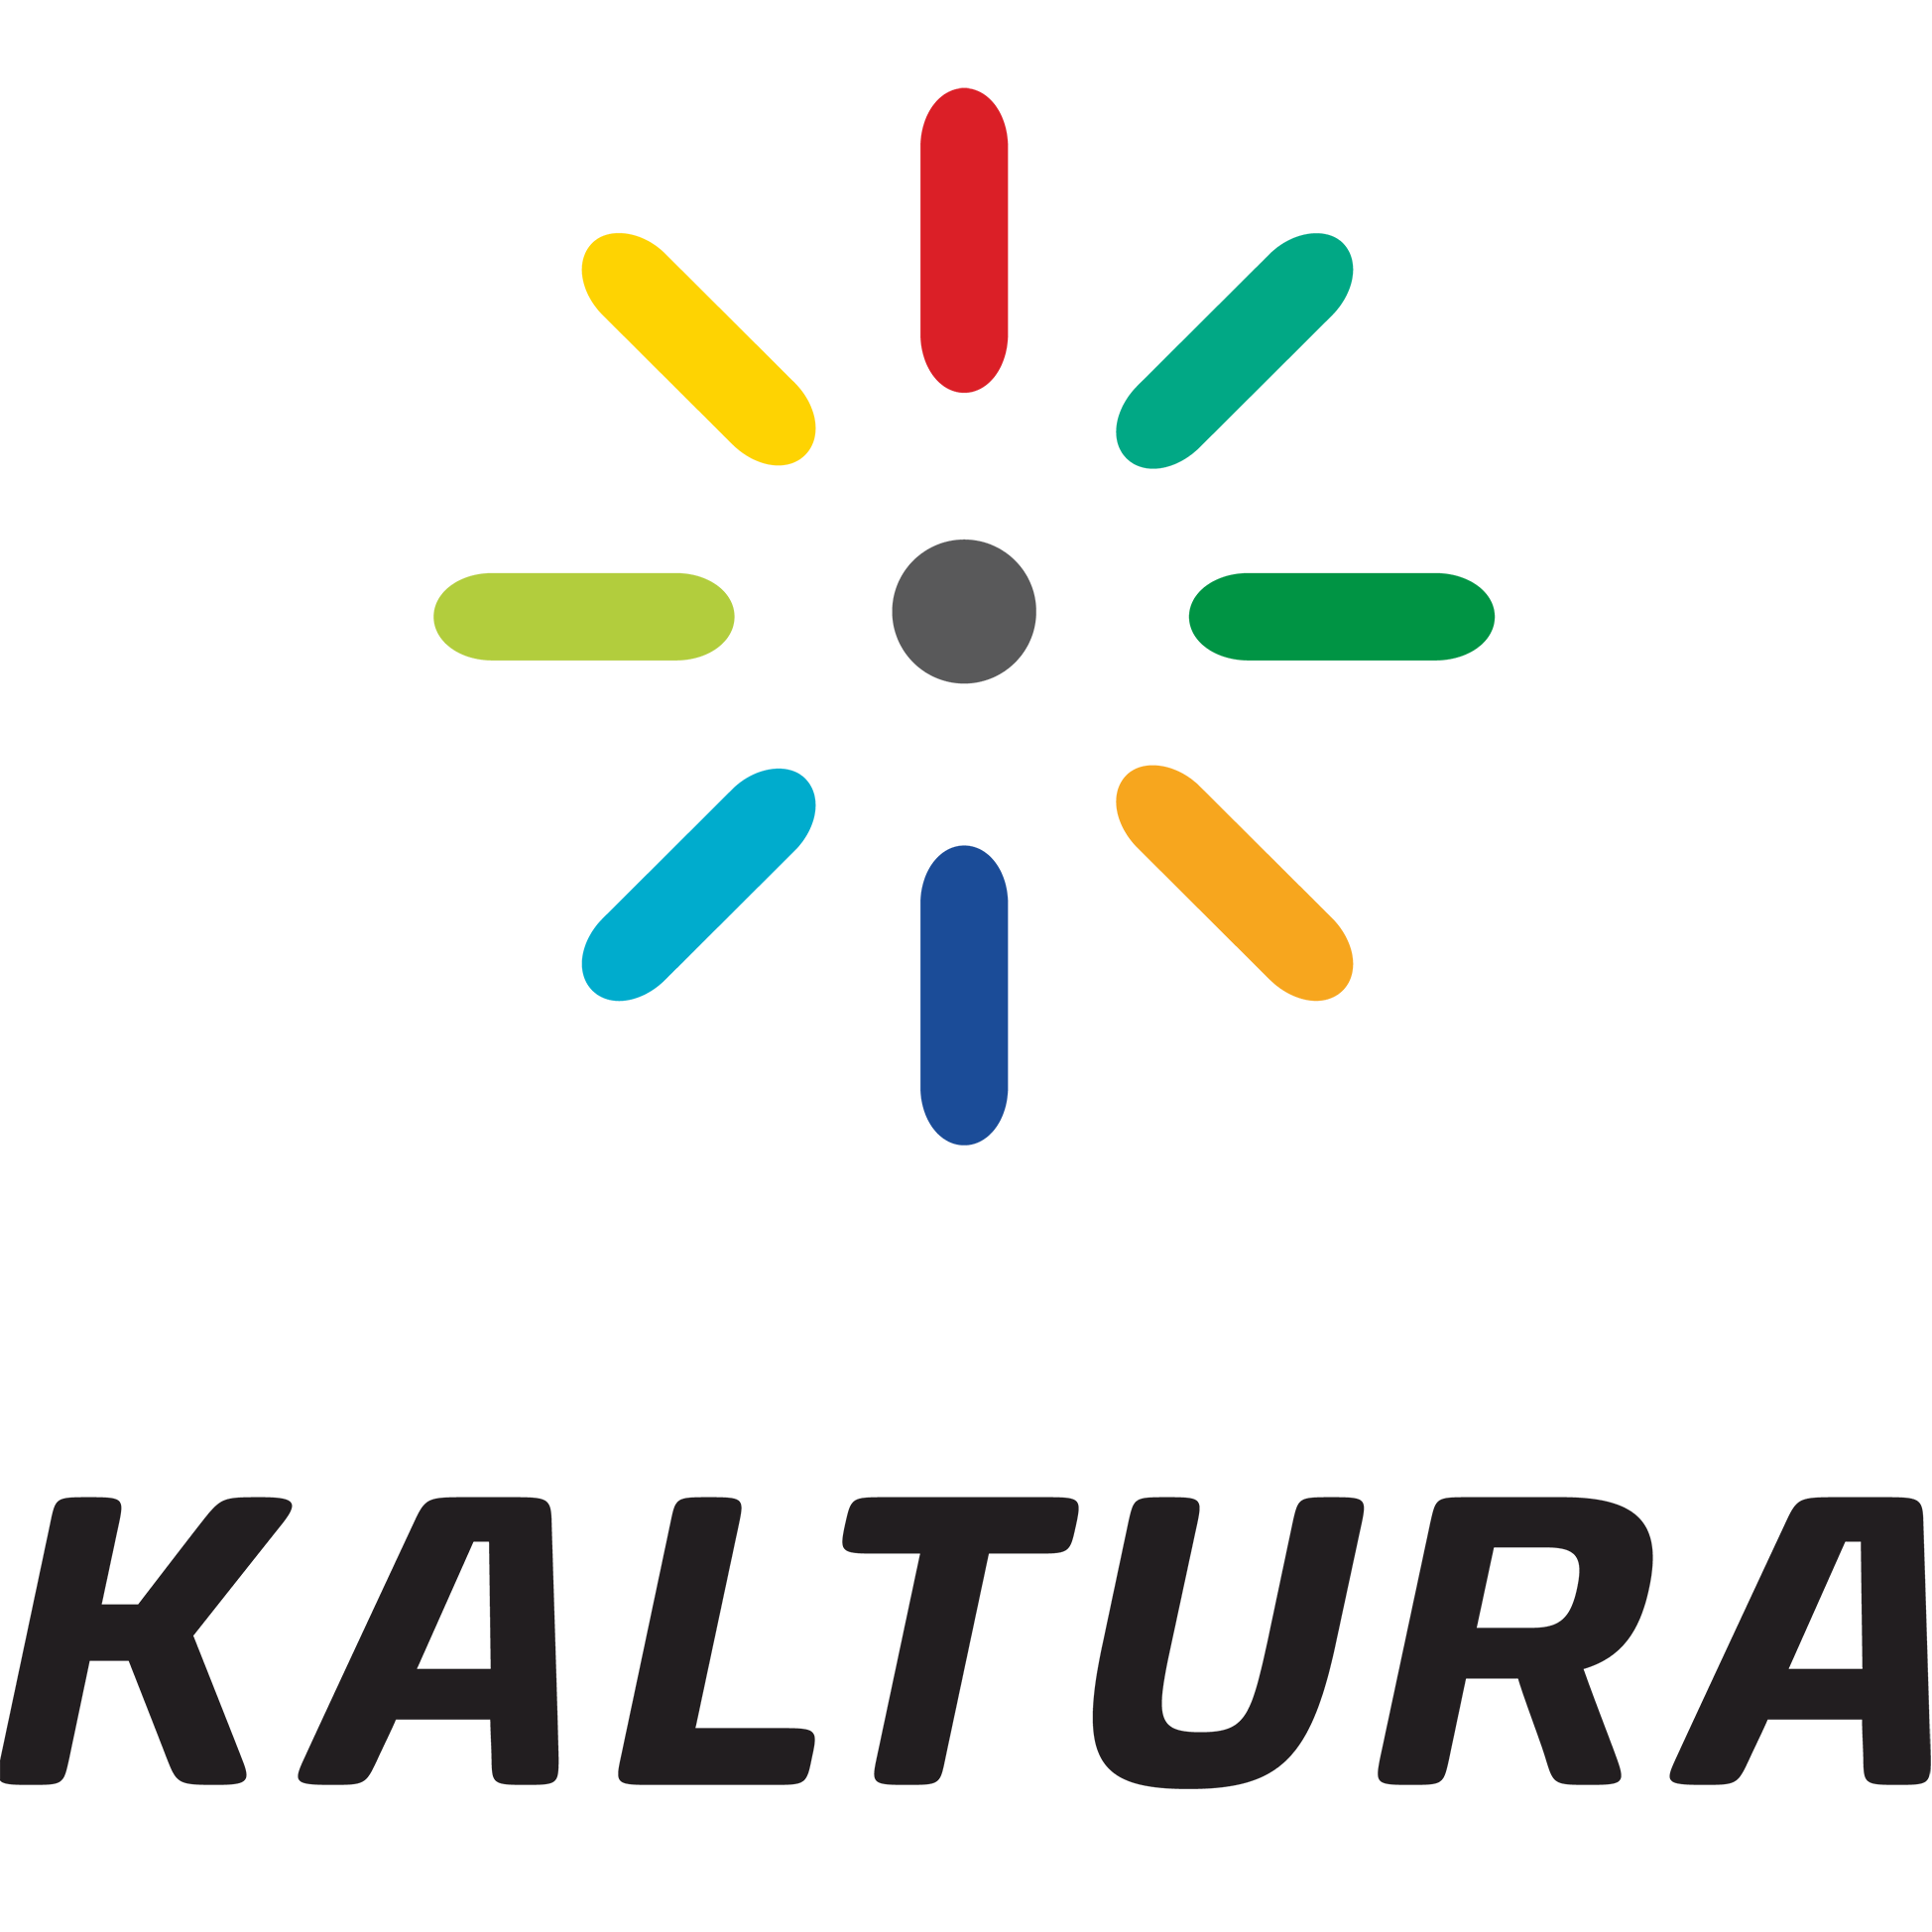 Kaltura Logo